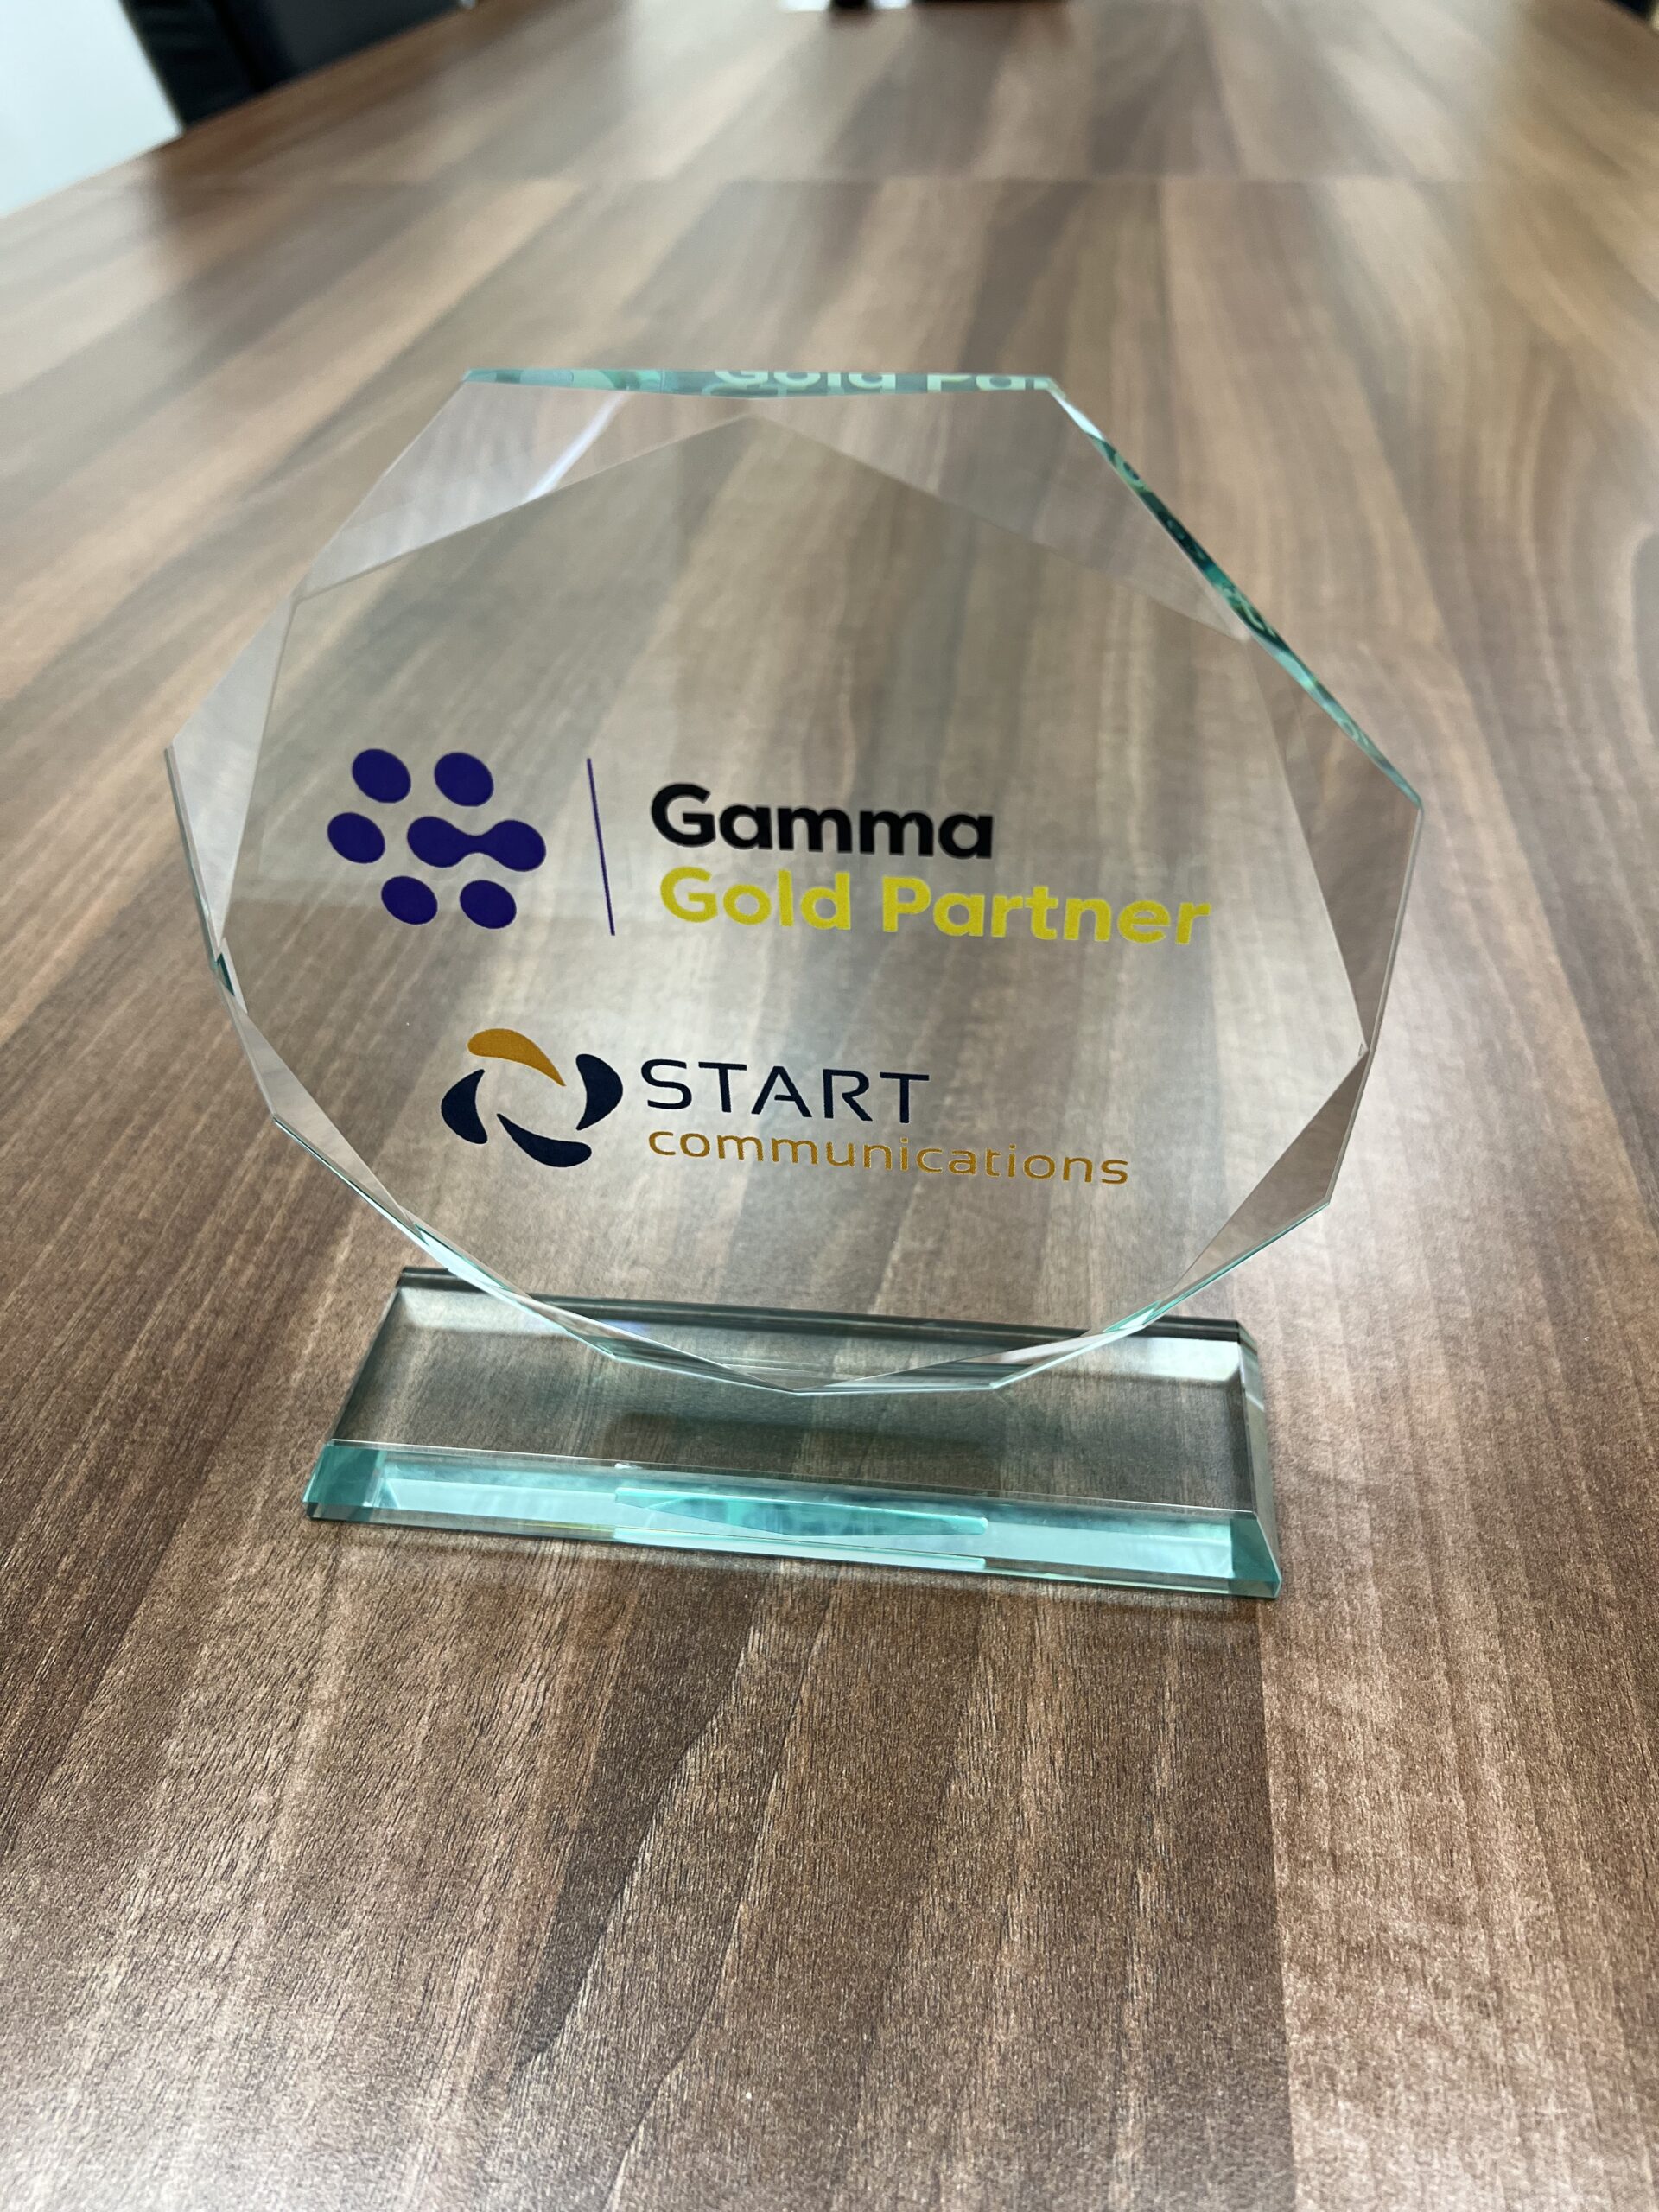 Start Communications Become Gamma Gold Partner